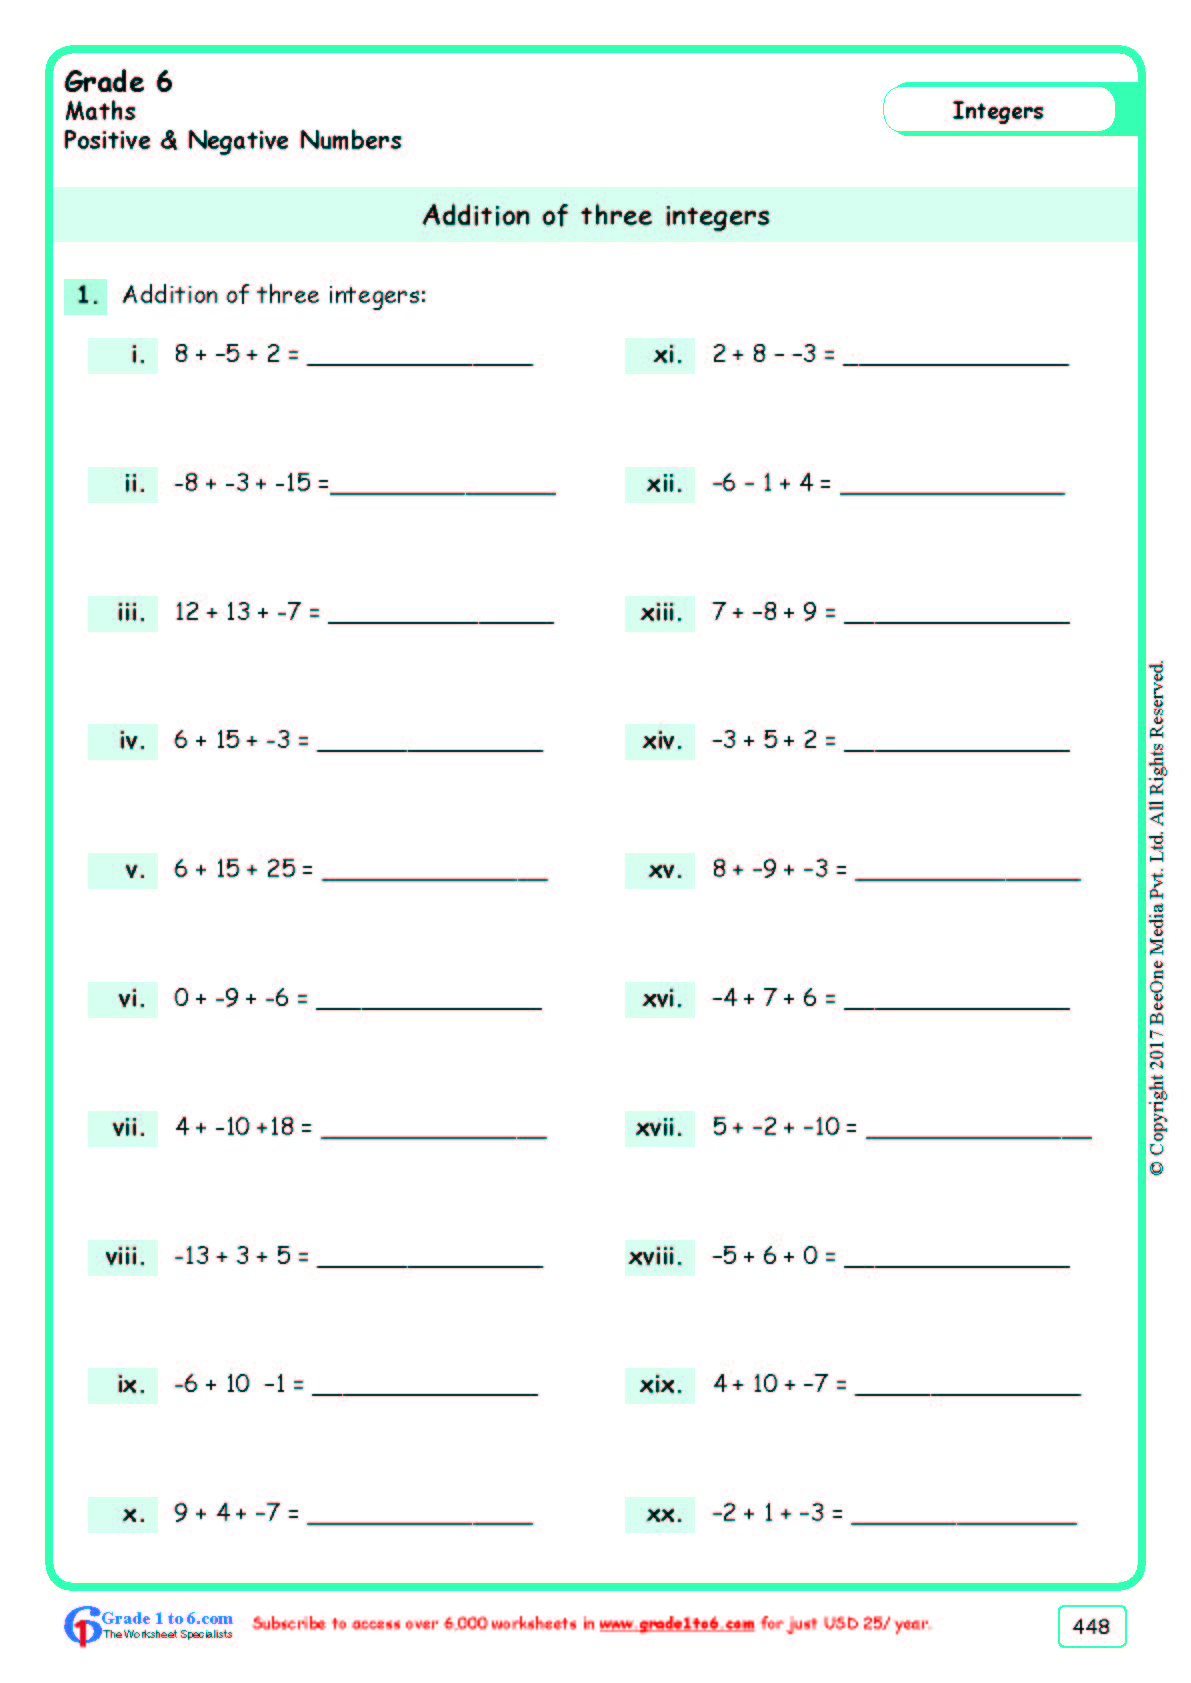 Adding Positive & Negative Integers Worksheets|www.grade1to6.com